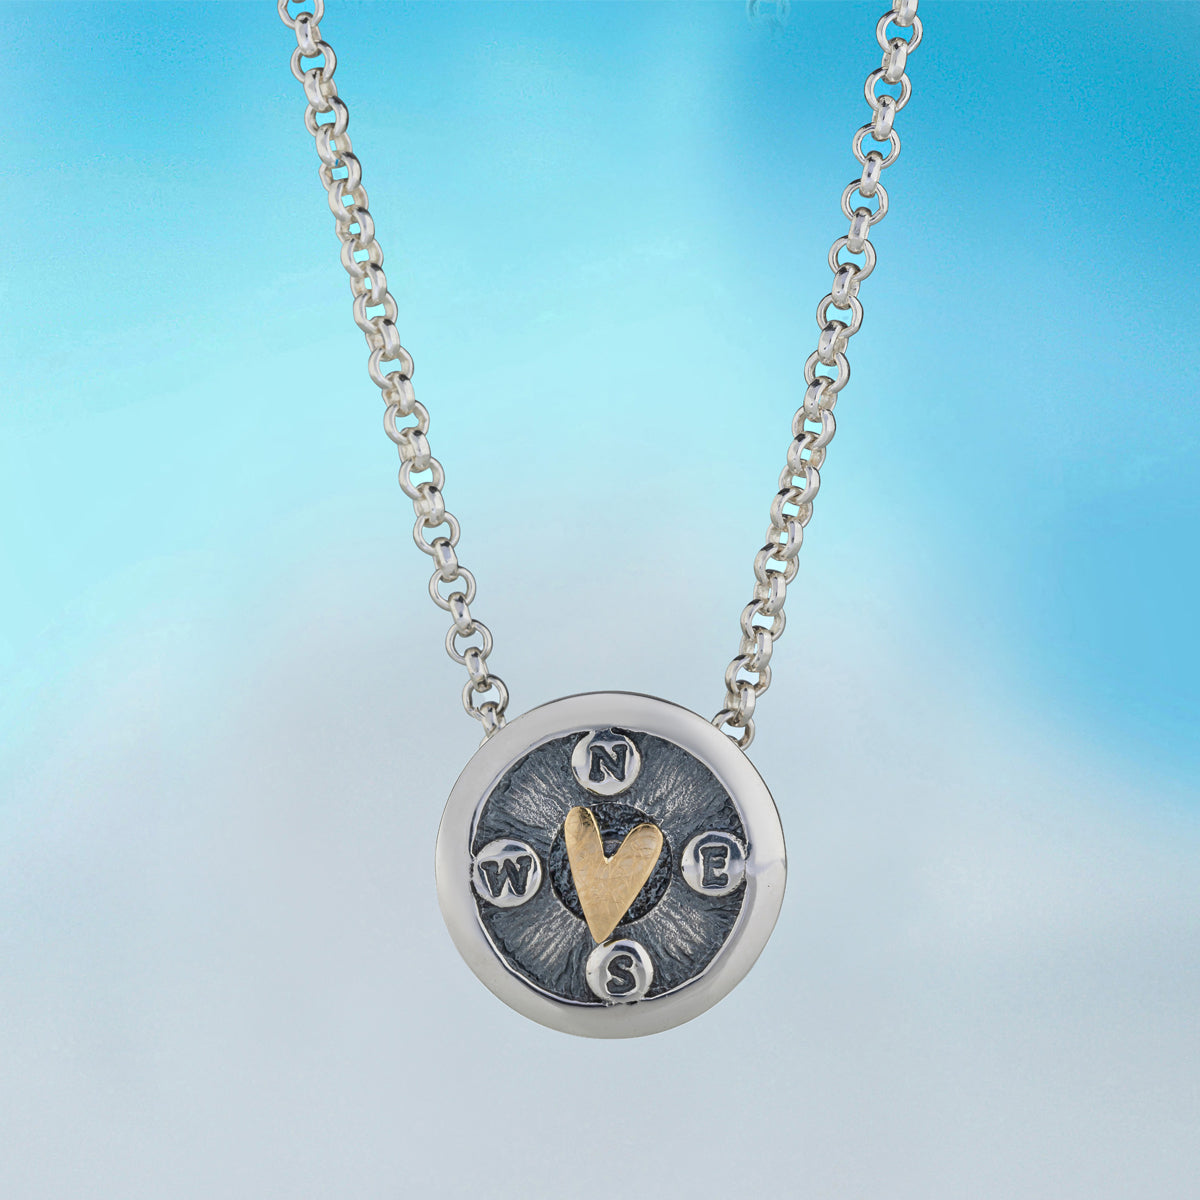 Follow Your Heart Pendant - The Nancy Smillie Shop - Art, Jewellery & Designer Gifts Glasgow